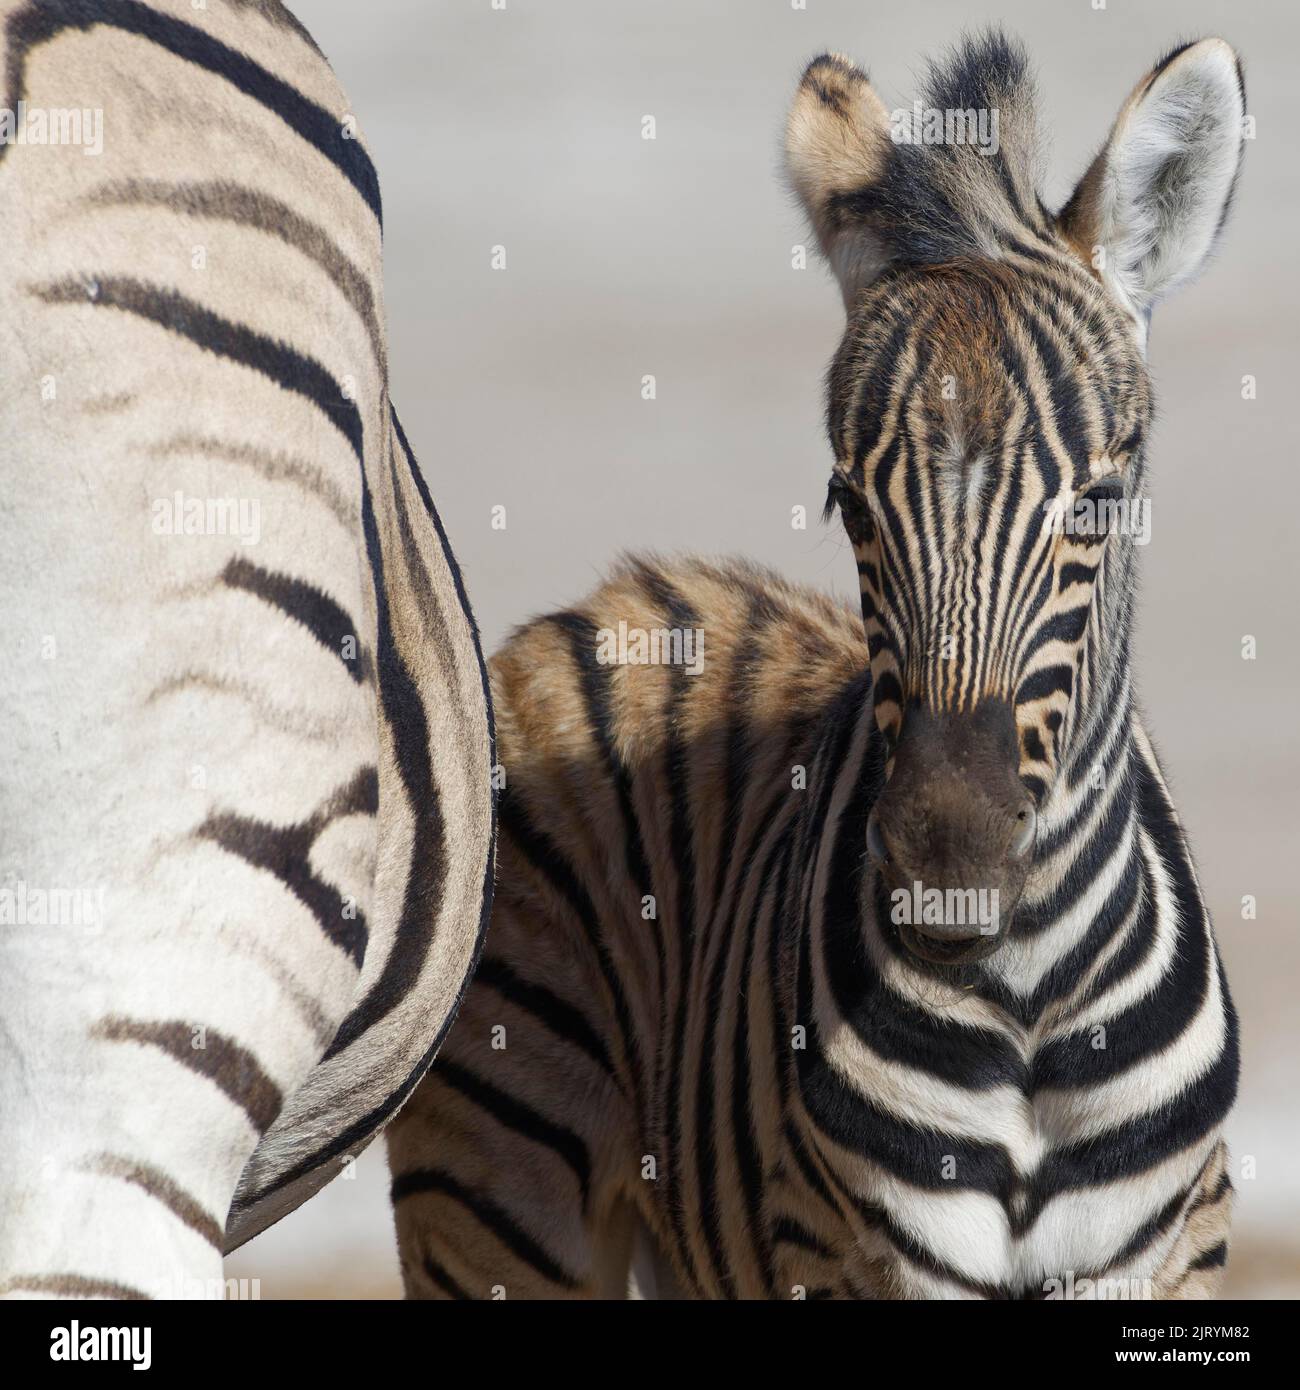 Burchells Zebras (Equus quagga burchellii), Erwachsenen- und Zebrafohlen, Tierporträt, Etosha-Nationalpark, Namibia, Afrika Stockfoto